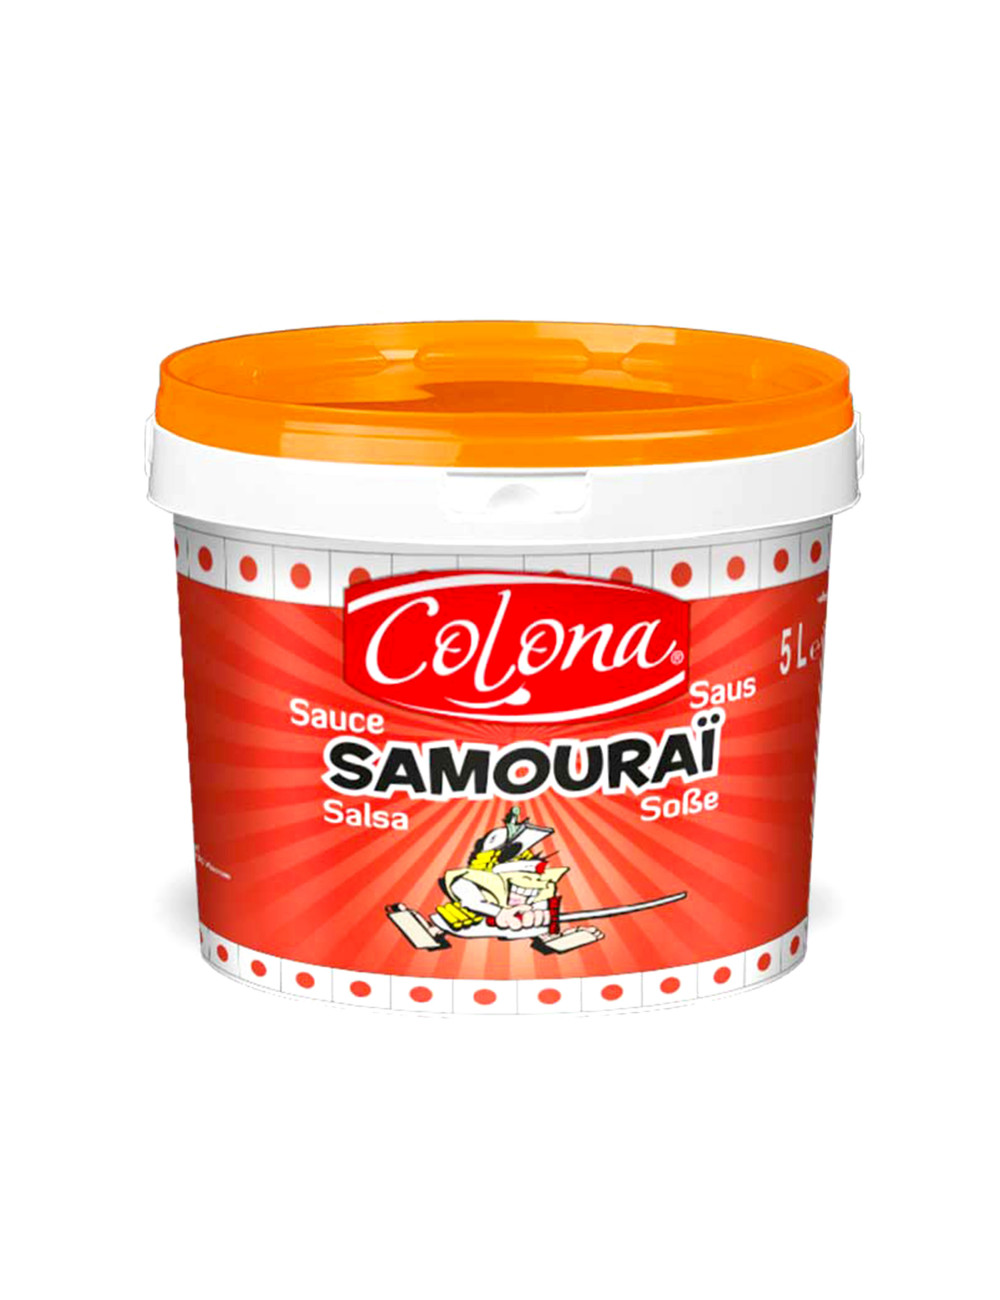 Sauce SAMOURAÏ 840g Colona - Trésors du Nord